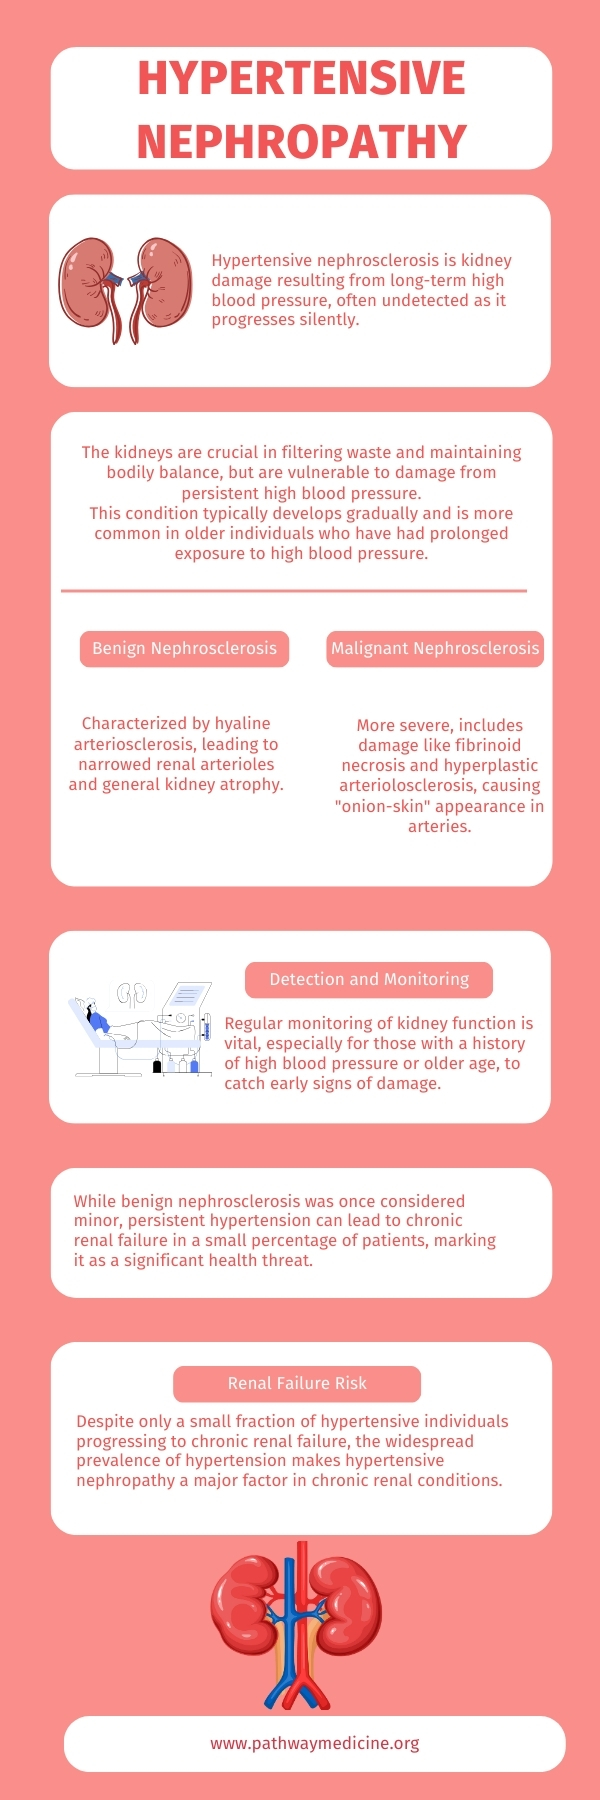 Hypertensive Nephropathy infographic